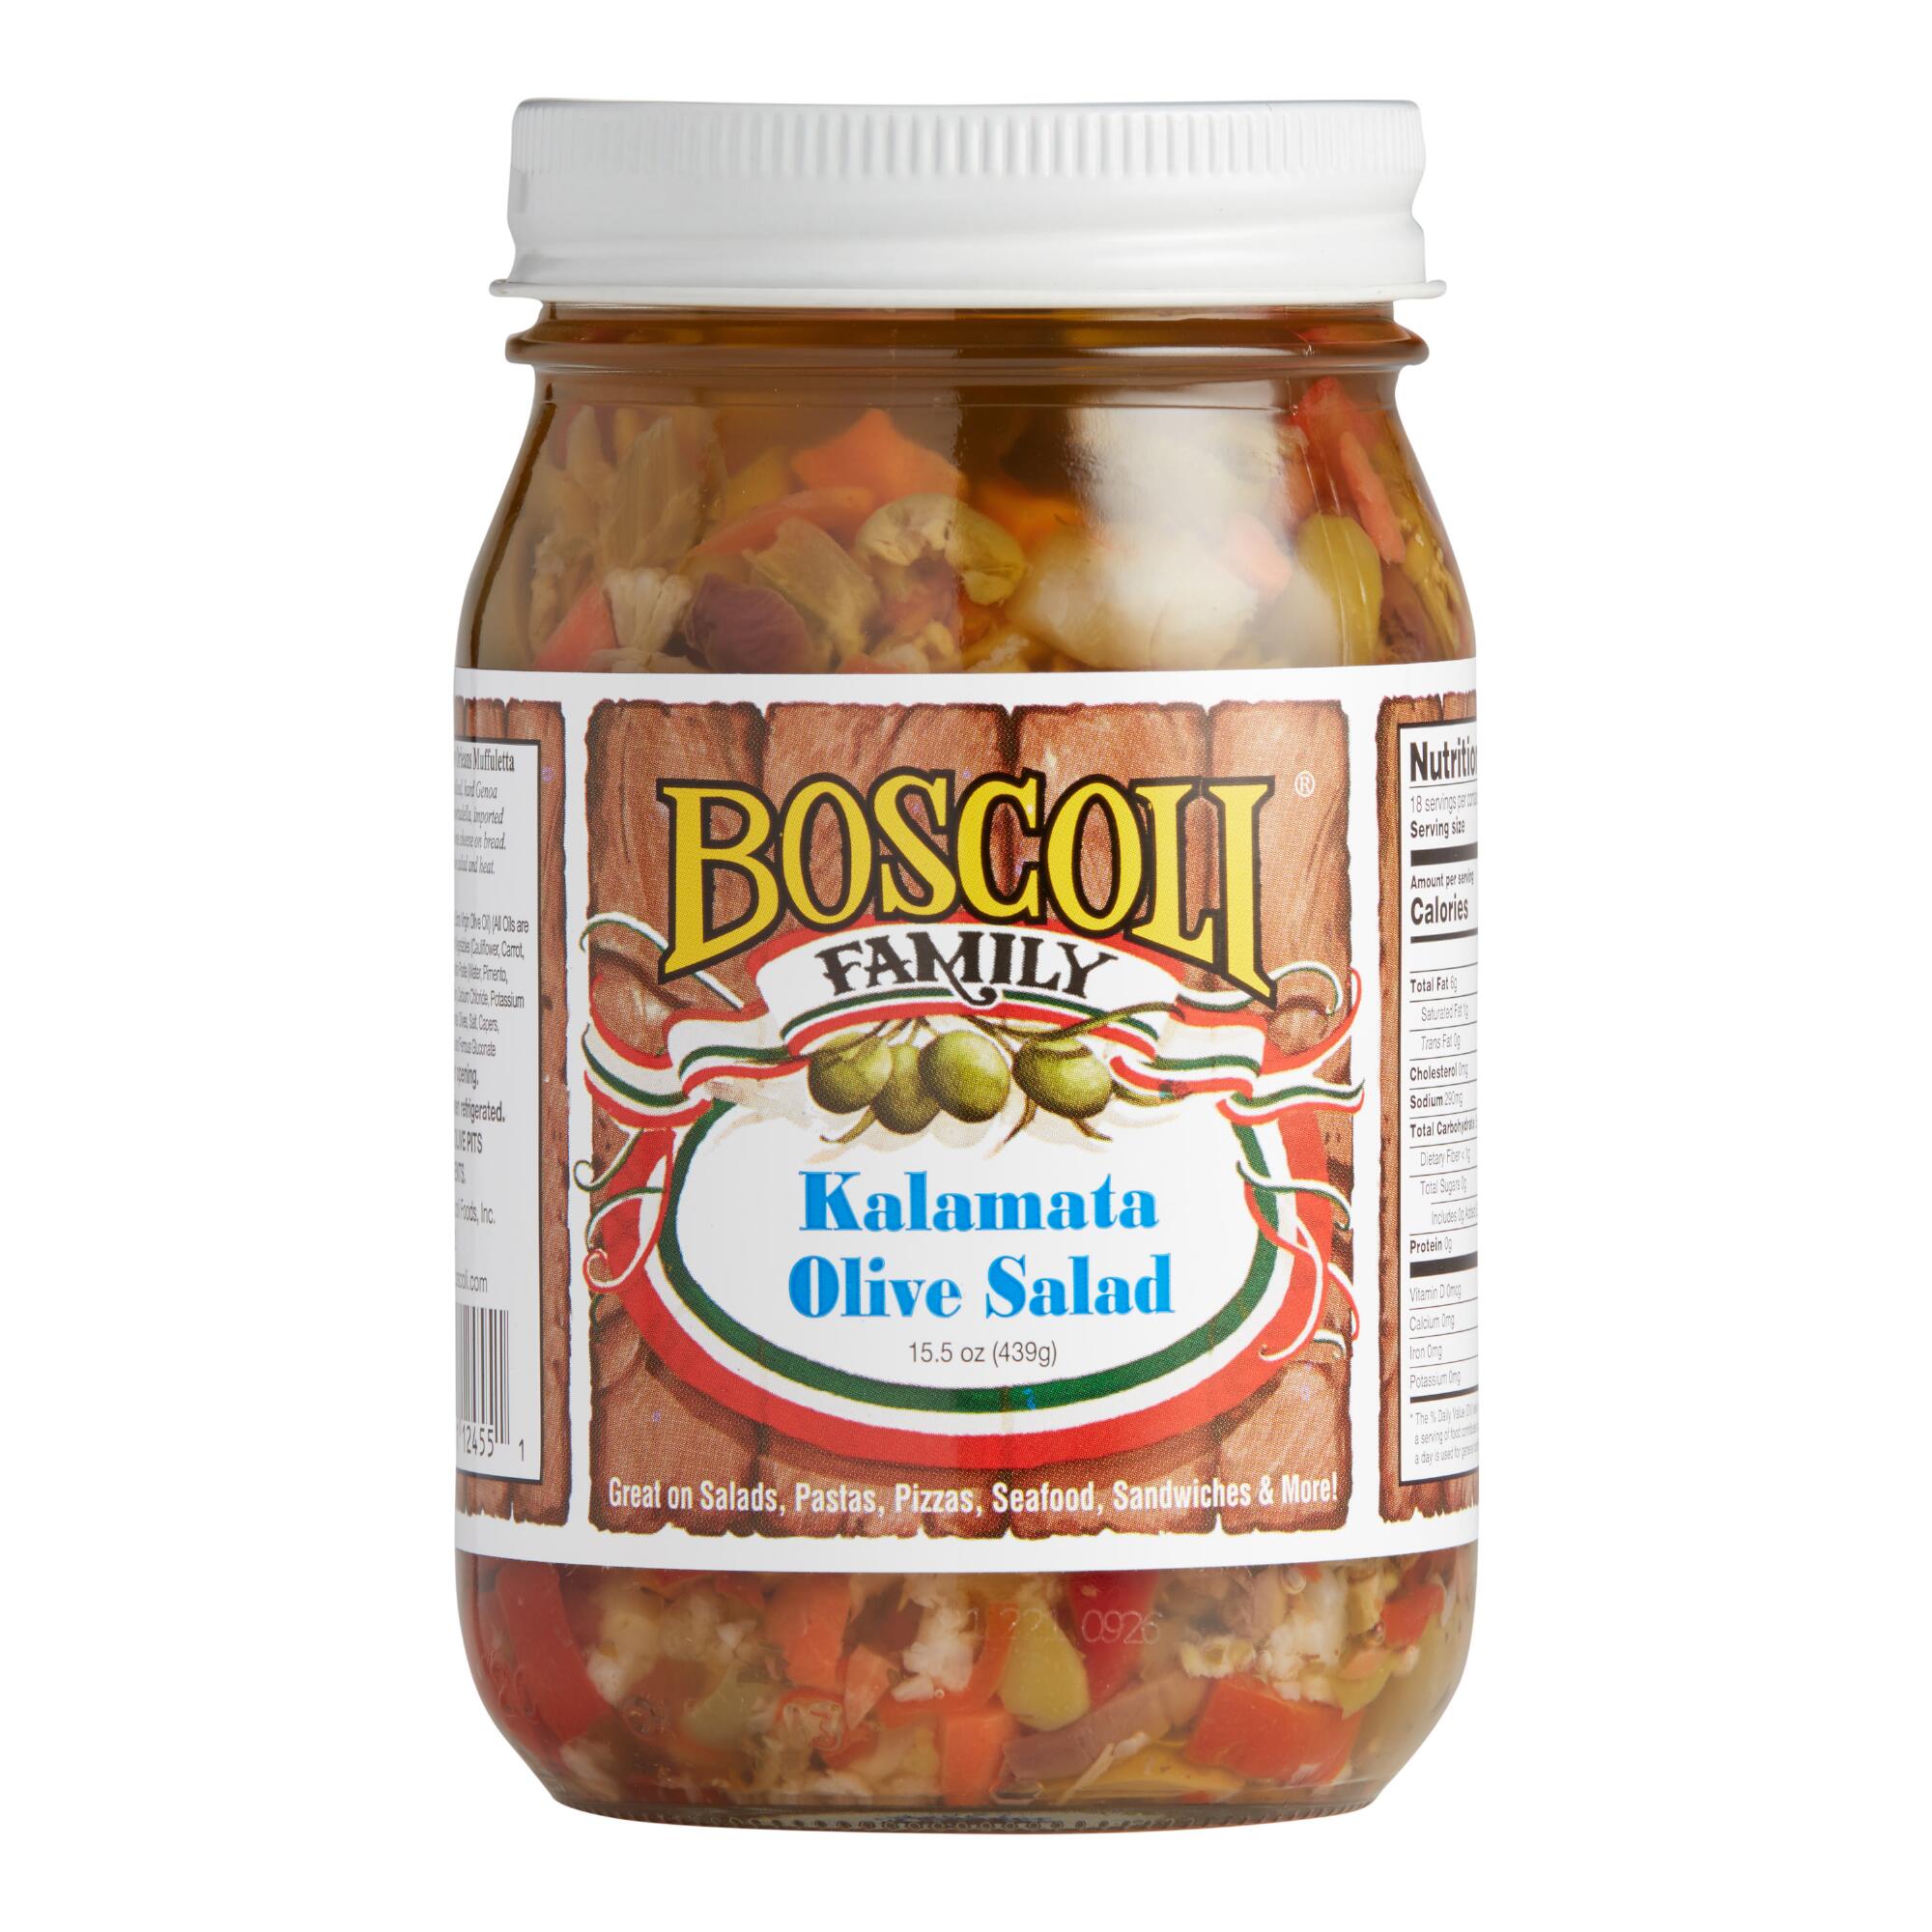 Boscoli Kalamata Olive Salad by World Market